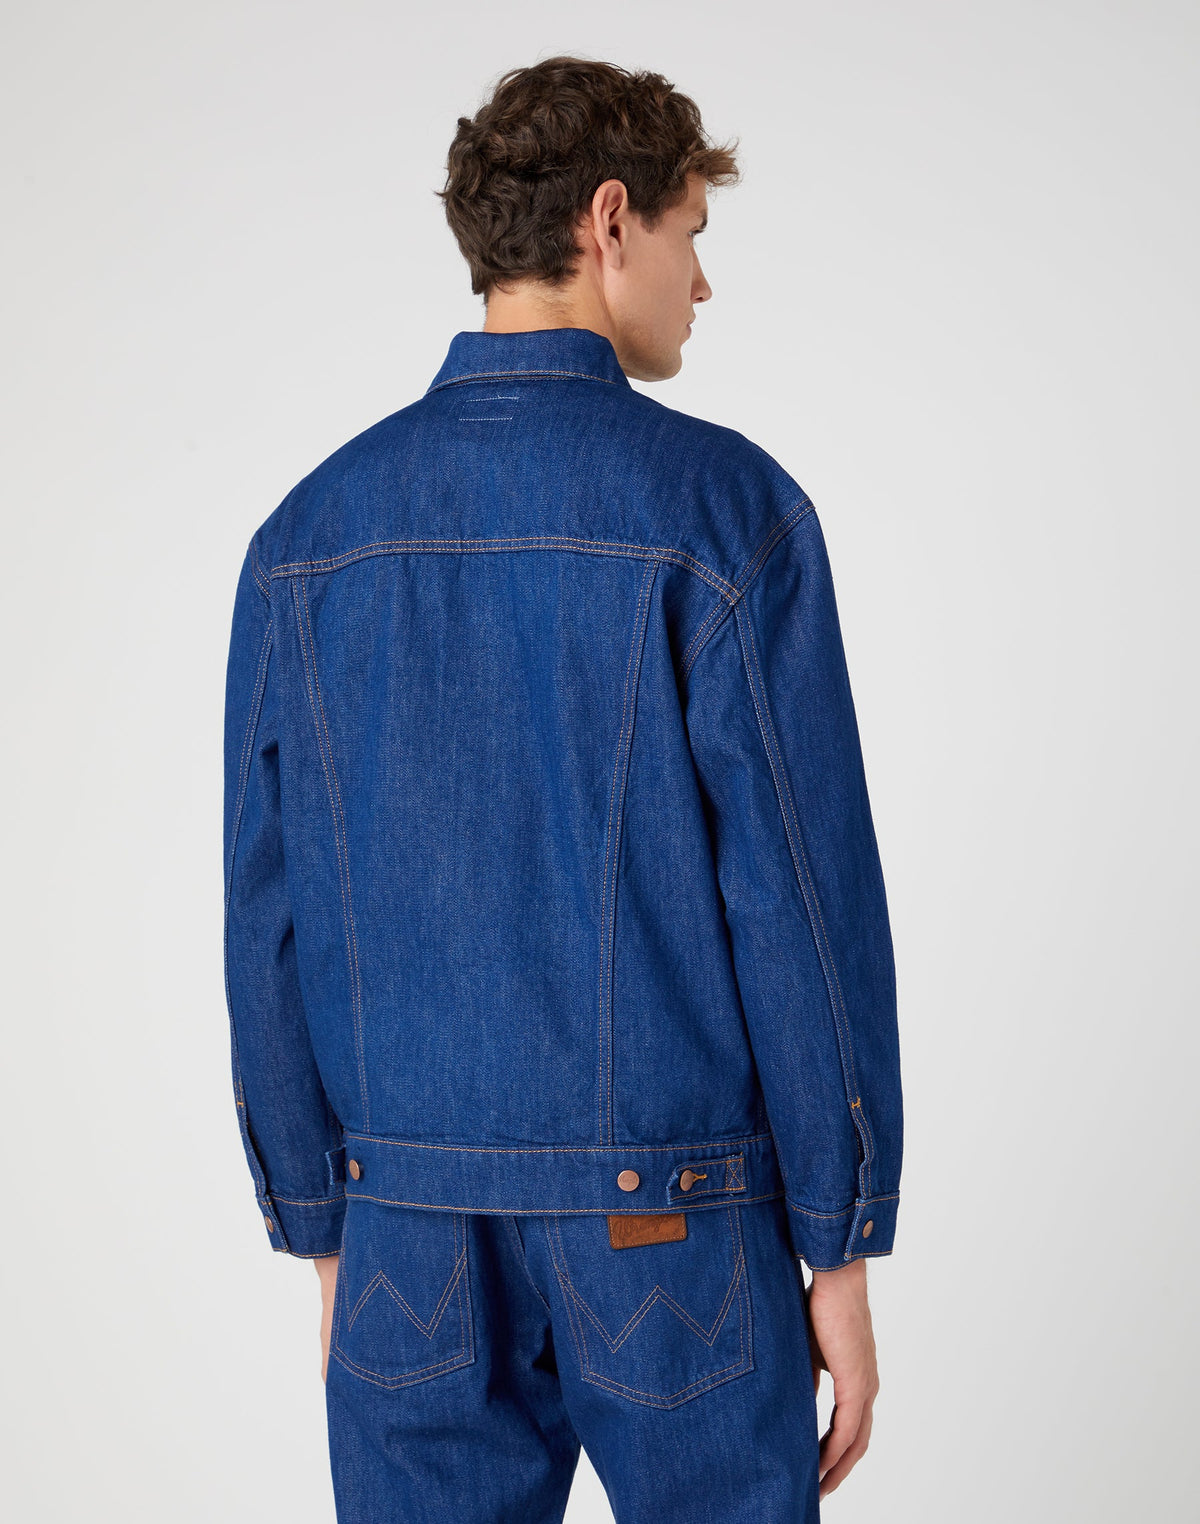 Anti Fit Jacket in Wrangler Blue